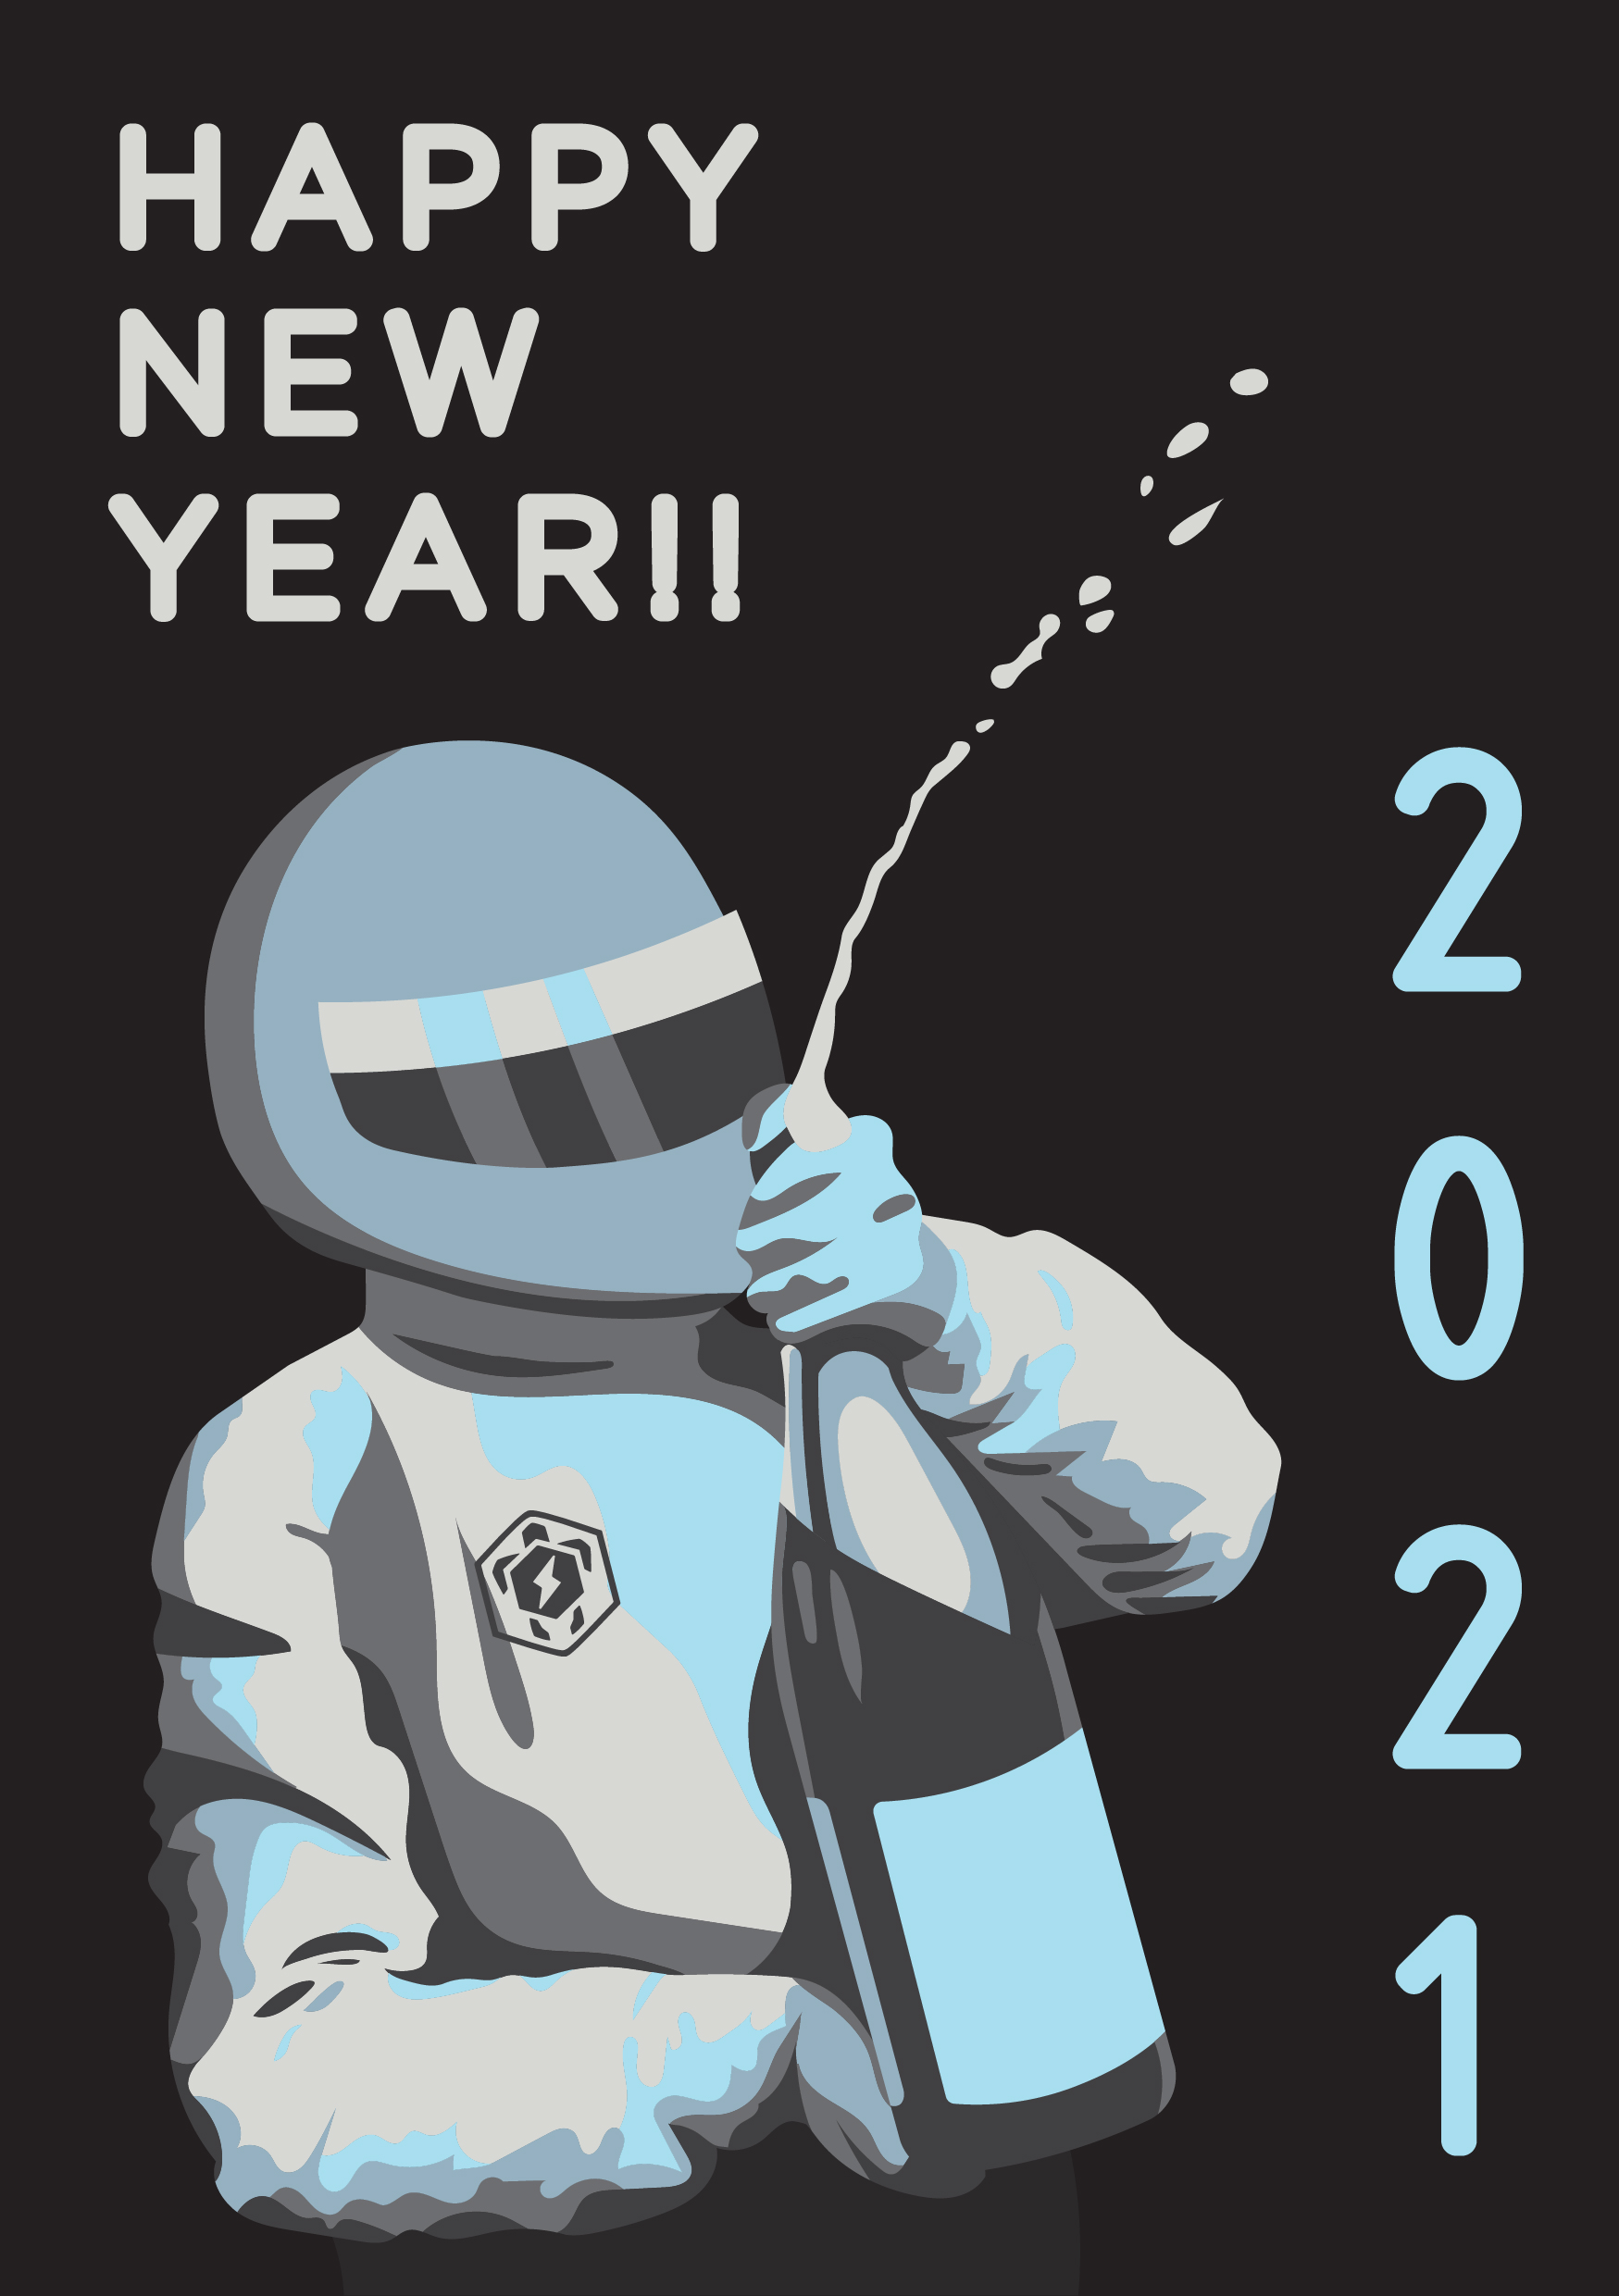 2021: Happy New year